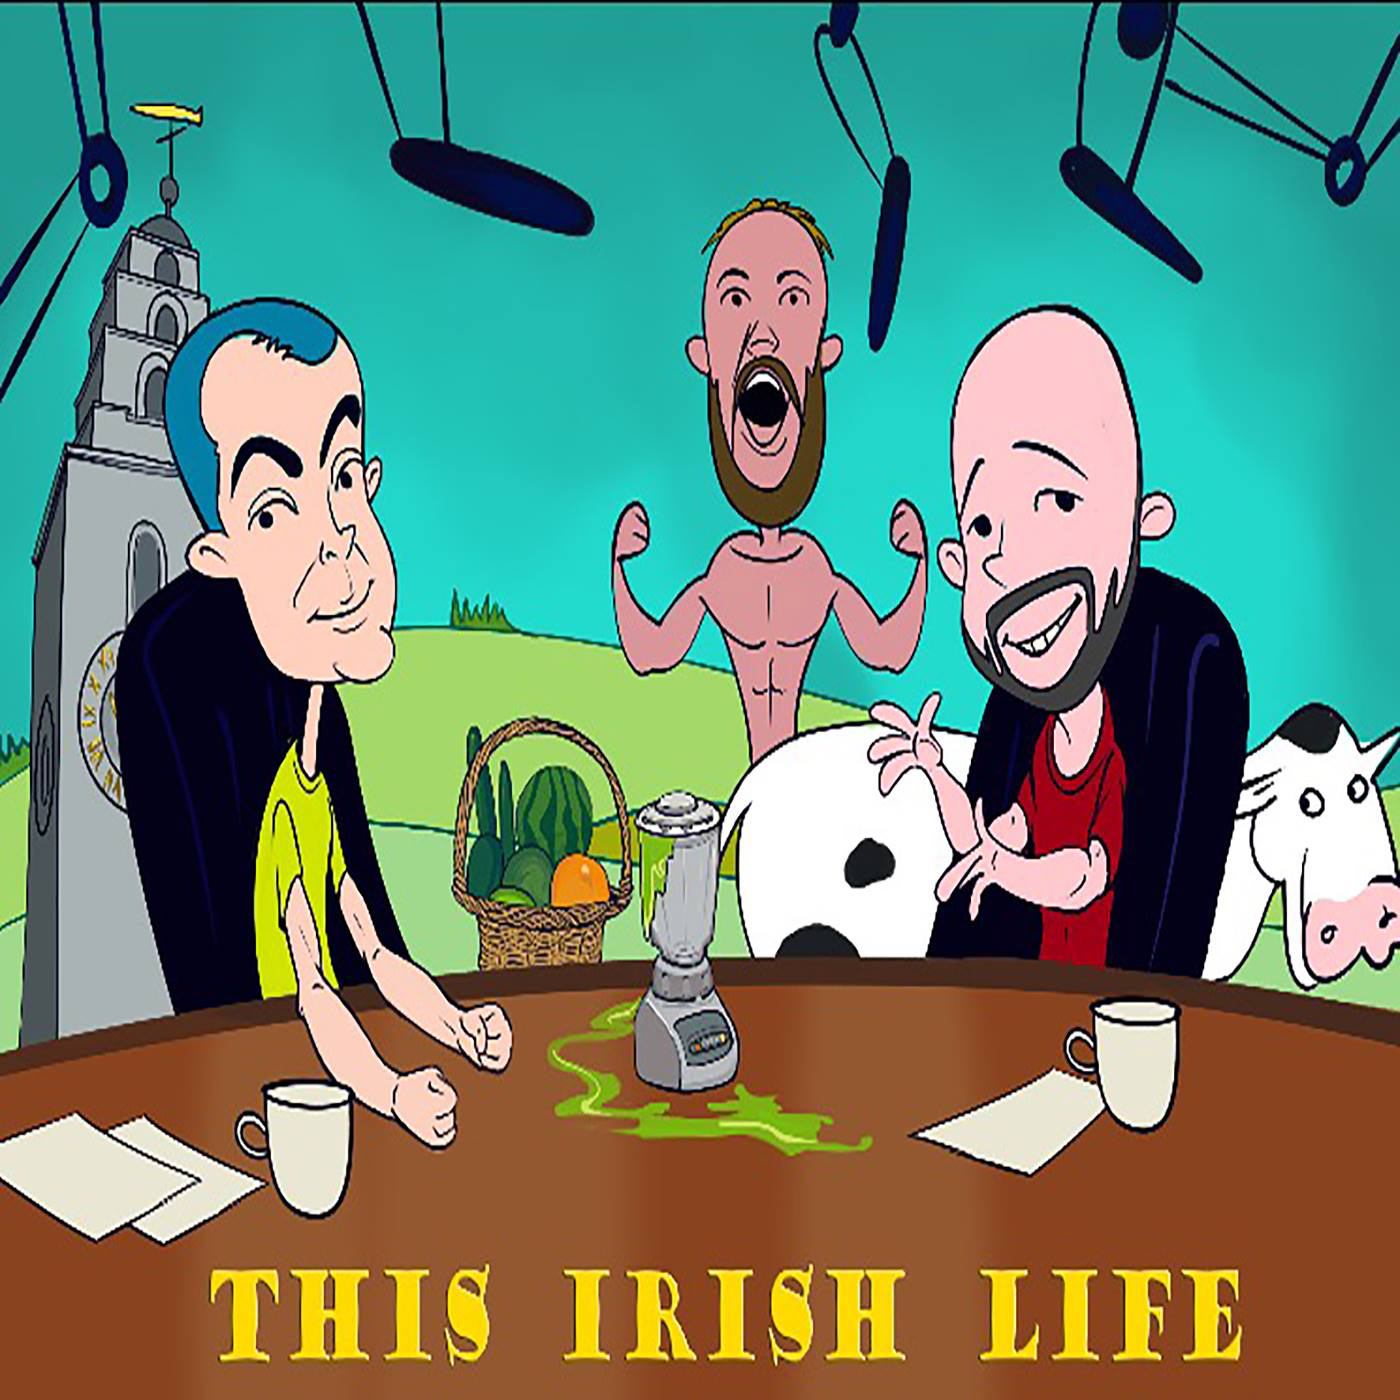 This Irish Life 29 - Mini - McGregor v Mayweather Pre-fight Breakdown